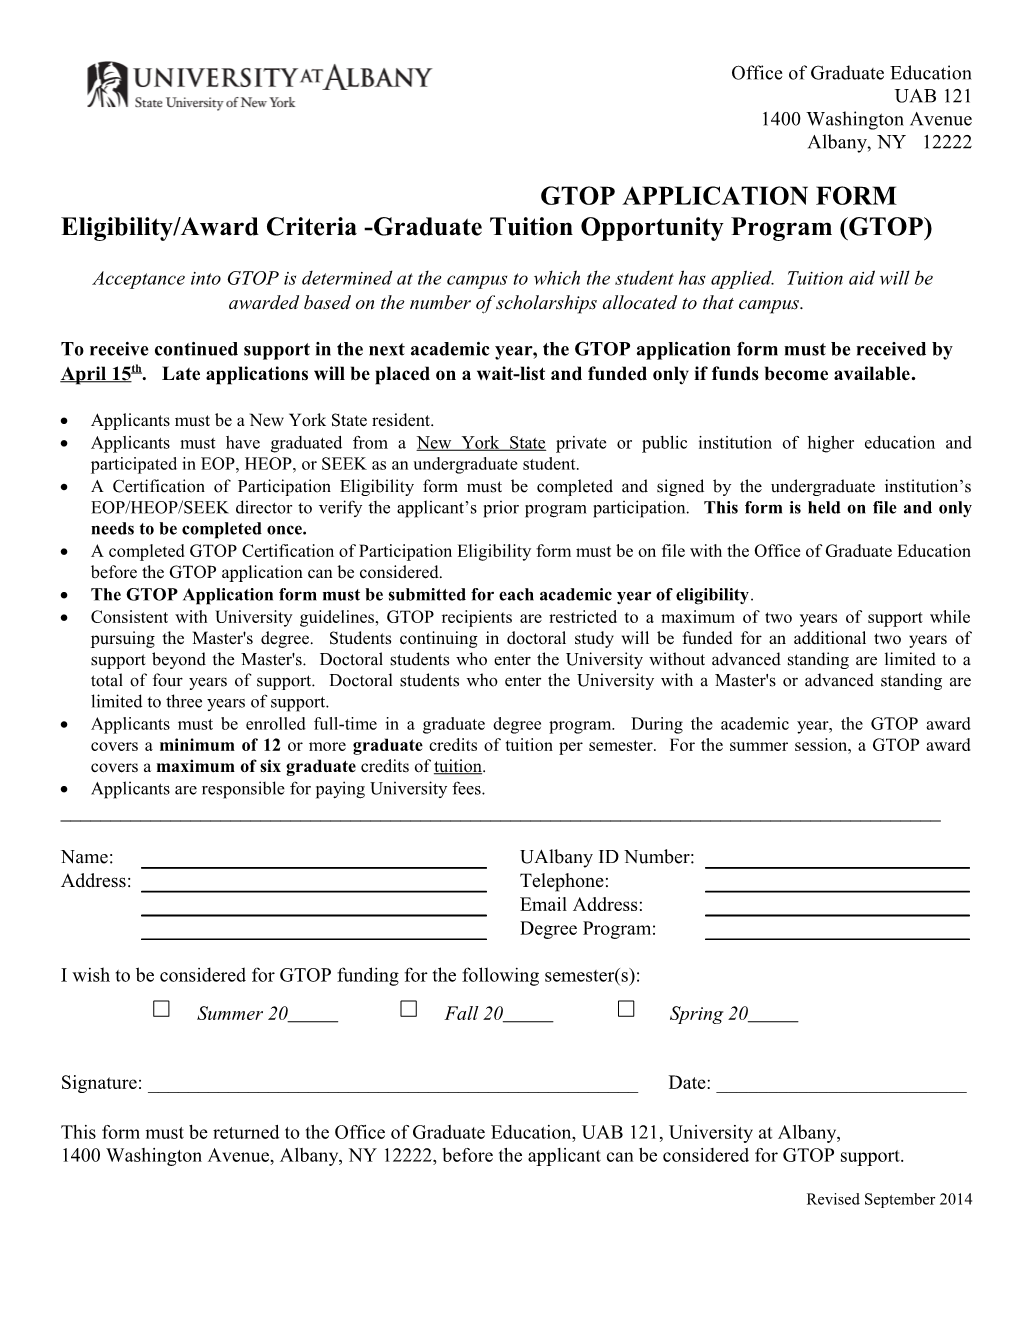 Eligibility/Award Criteria -Graduate Tuition Opportunity Program (GTOP)